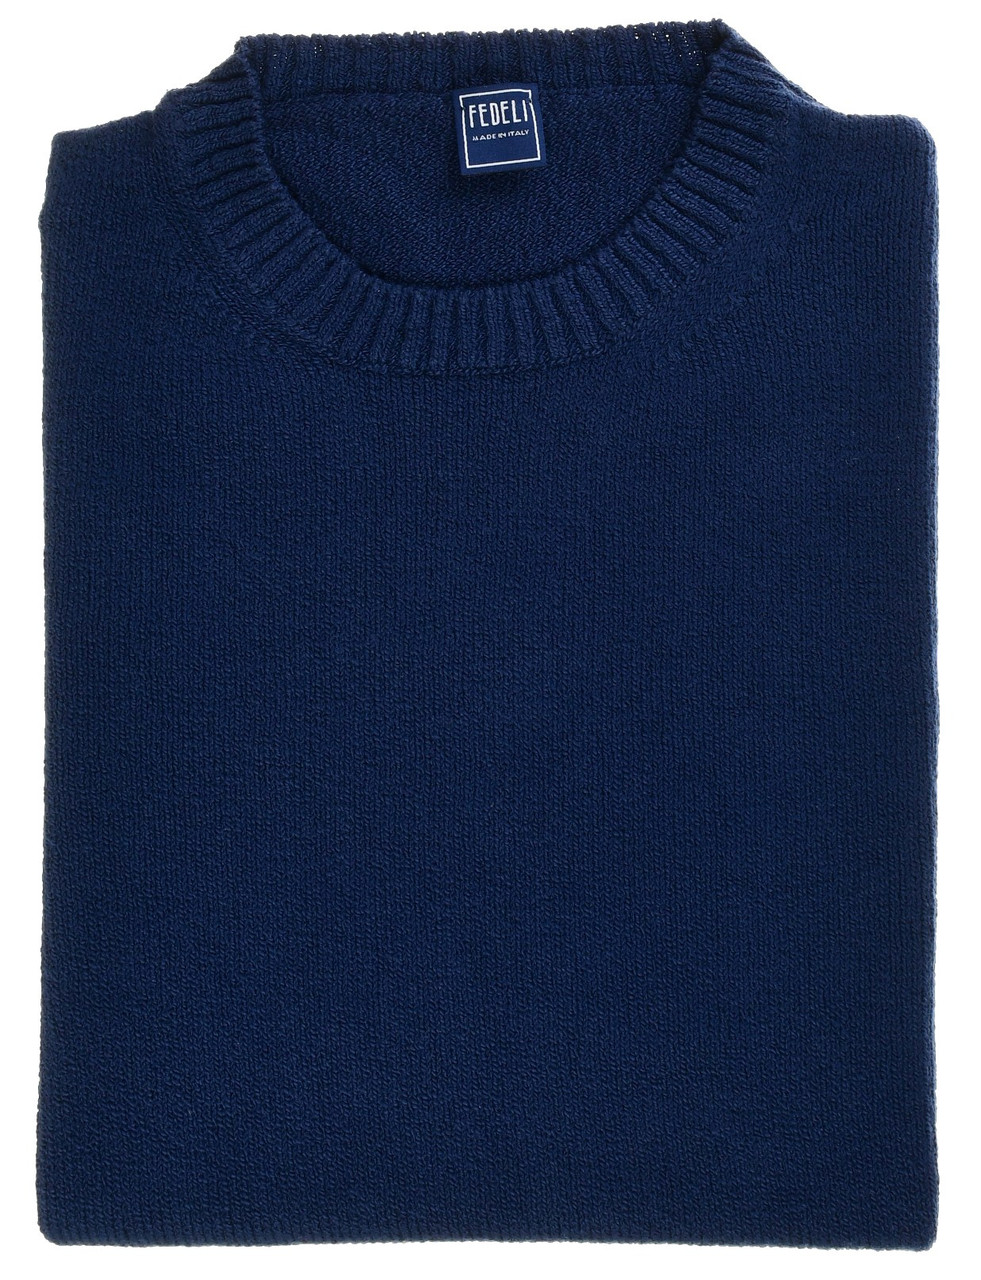 Fedeli Sweater Crewneck Size Large Blue 16SW0111